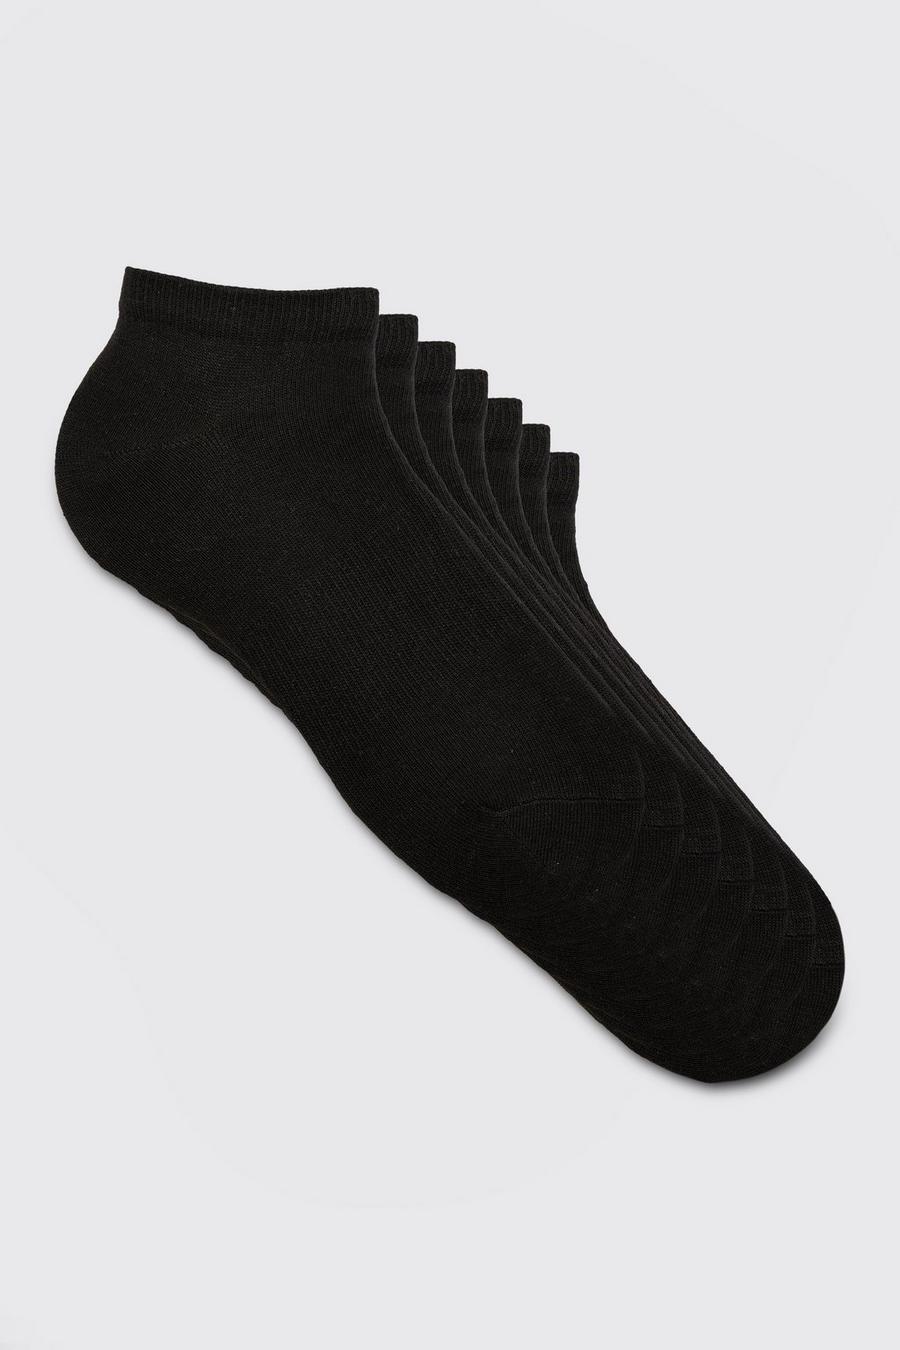 Pack de 7 pares de calcetines deportivos lisos, Black negro